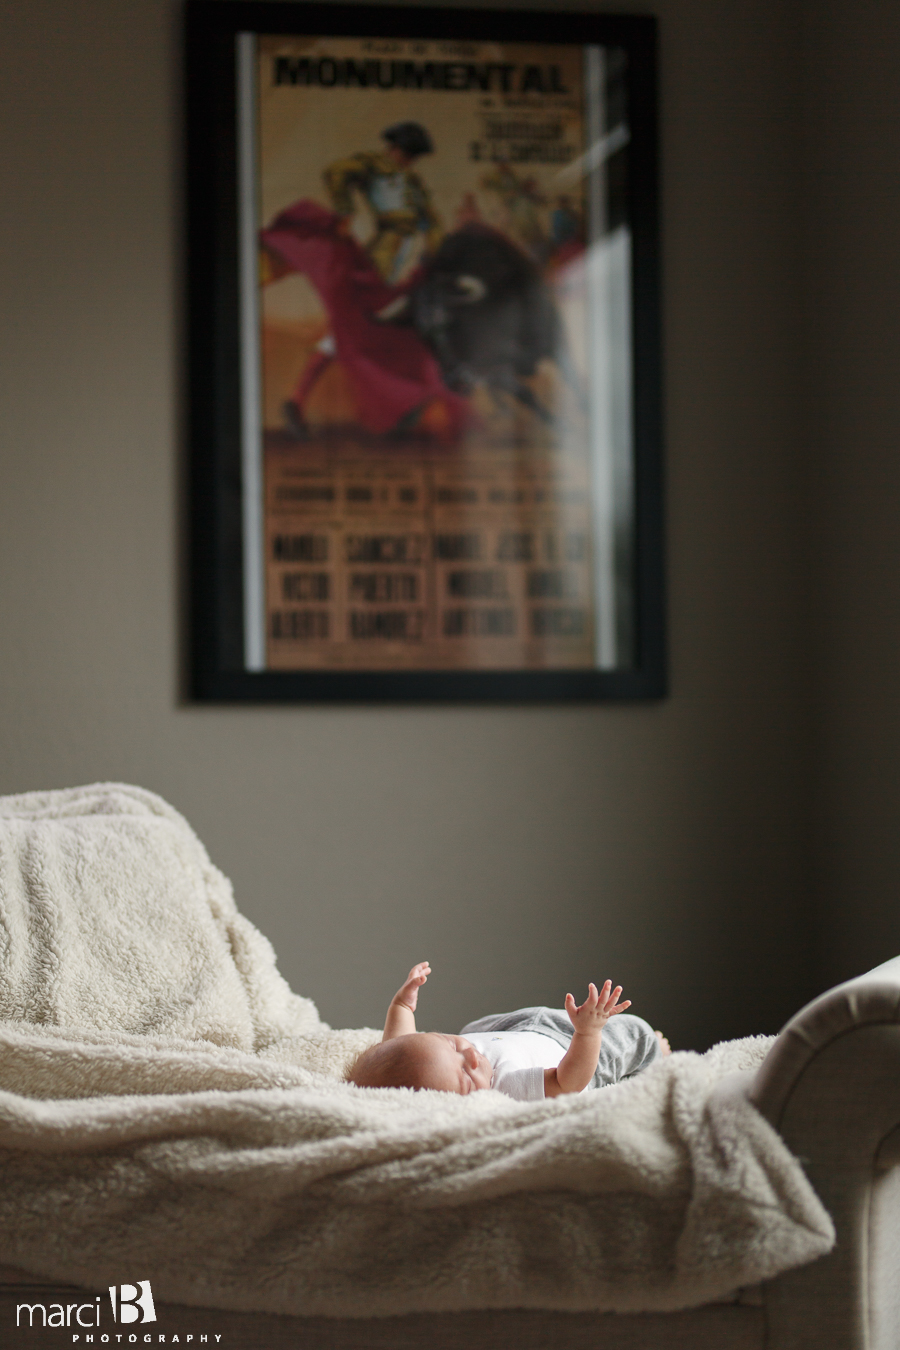 Corvallis Newborn Photography - baby photographer - preemie